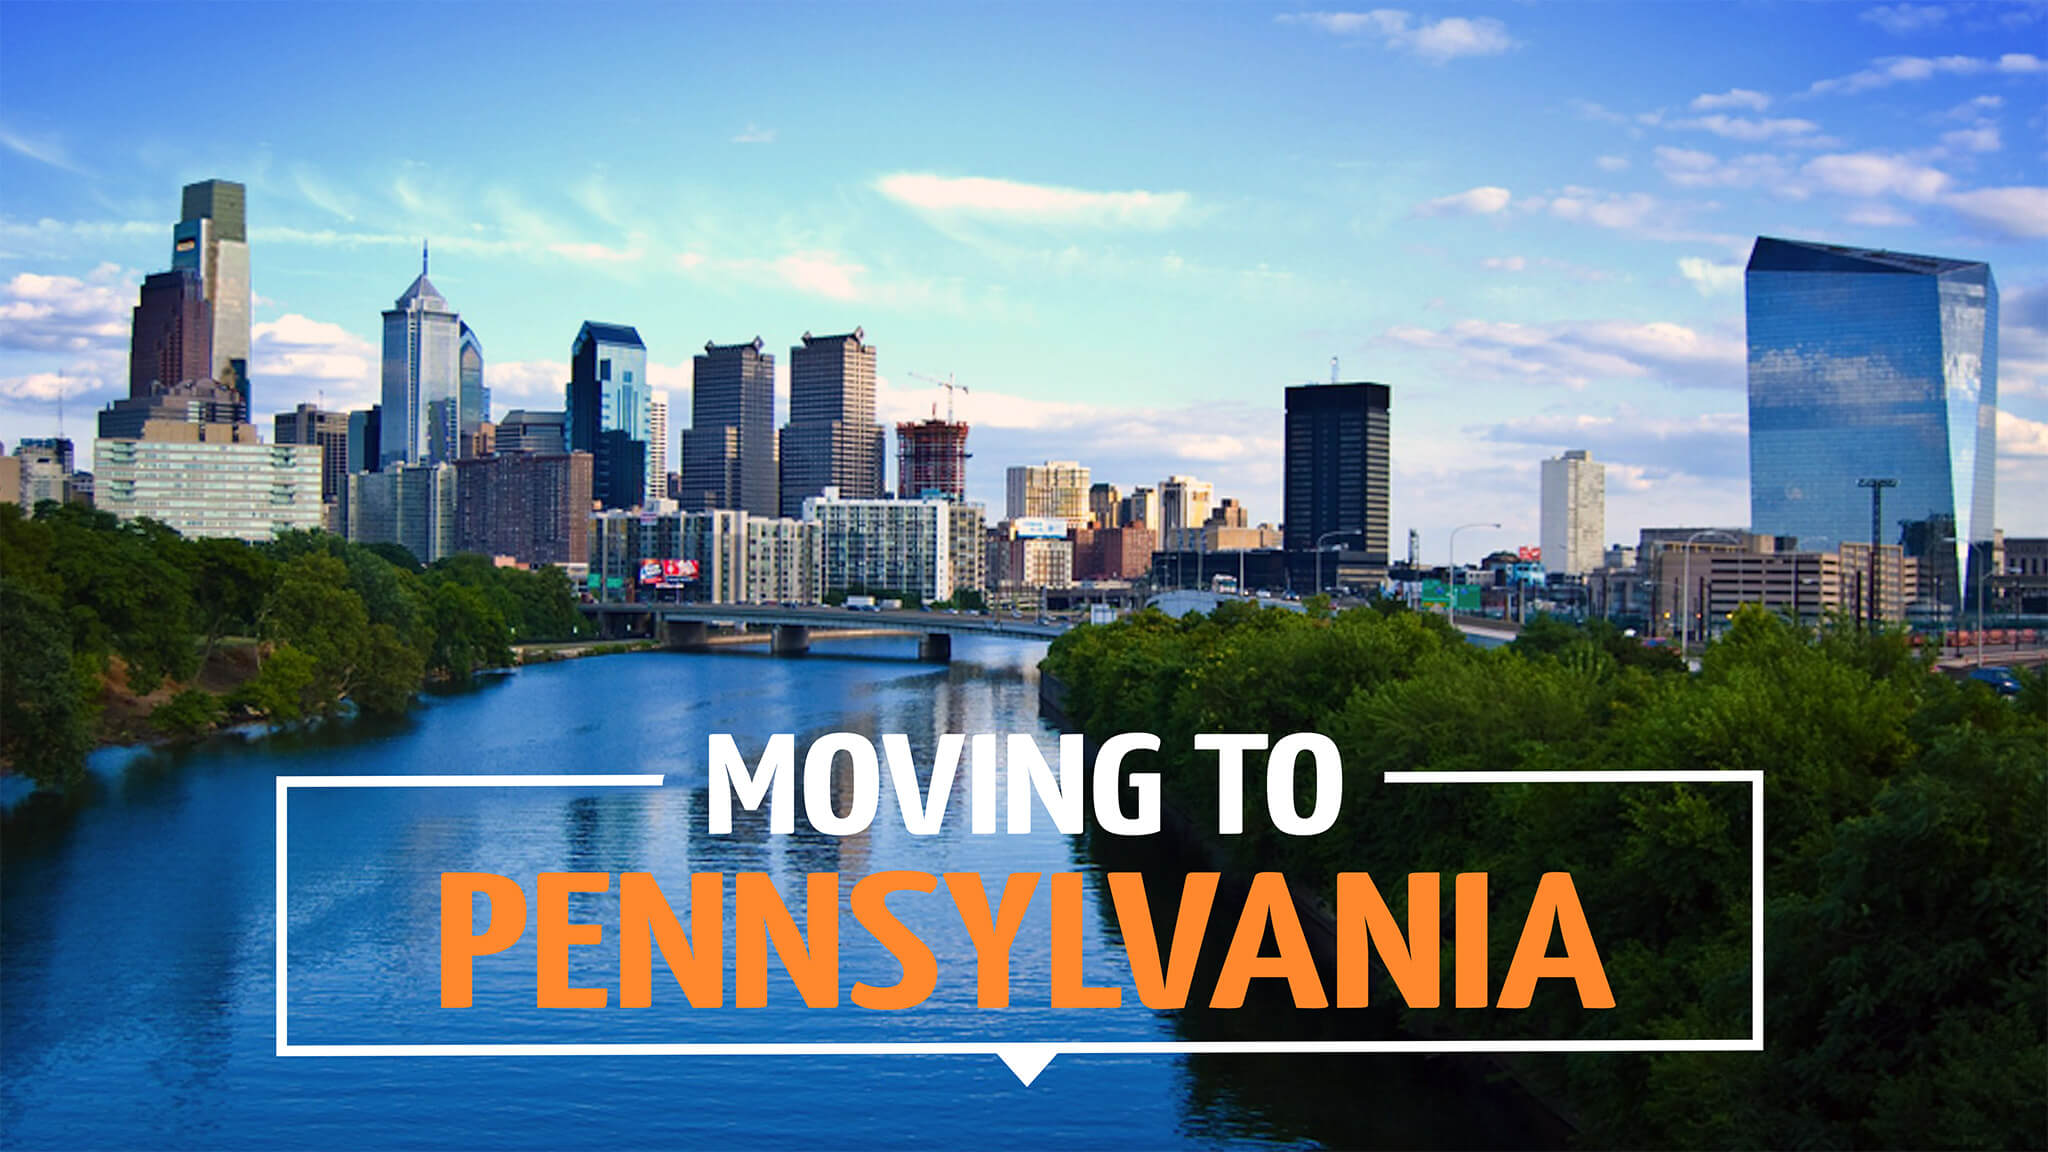 Moving to Pennsylvania